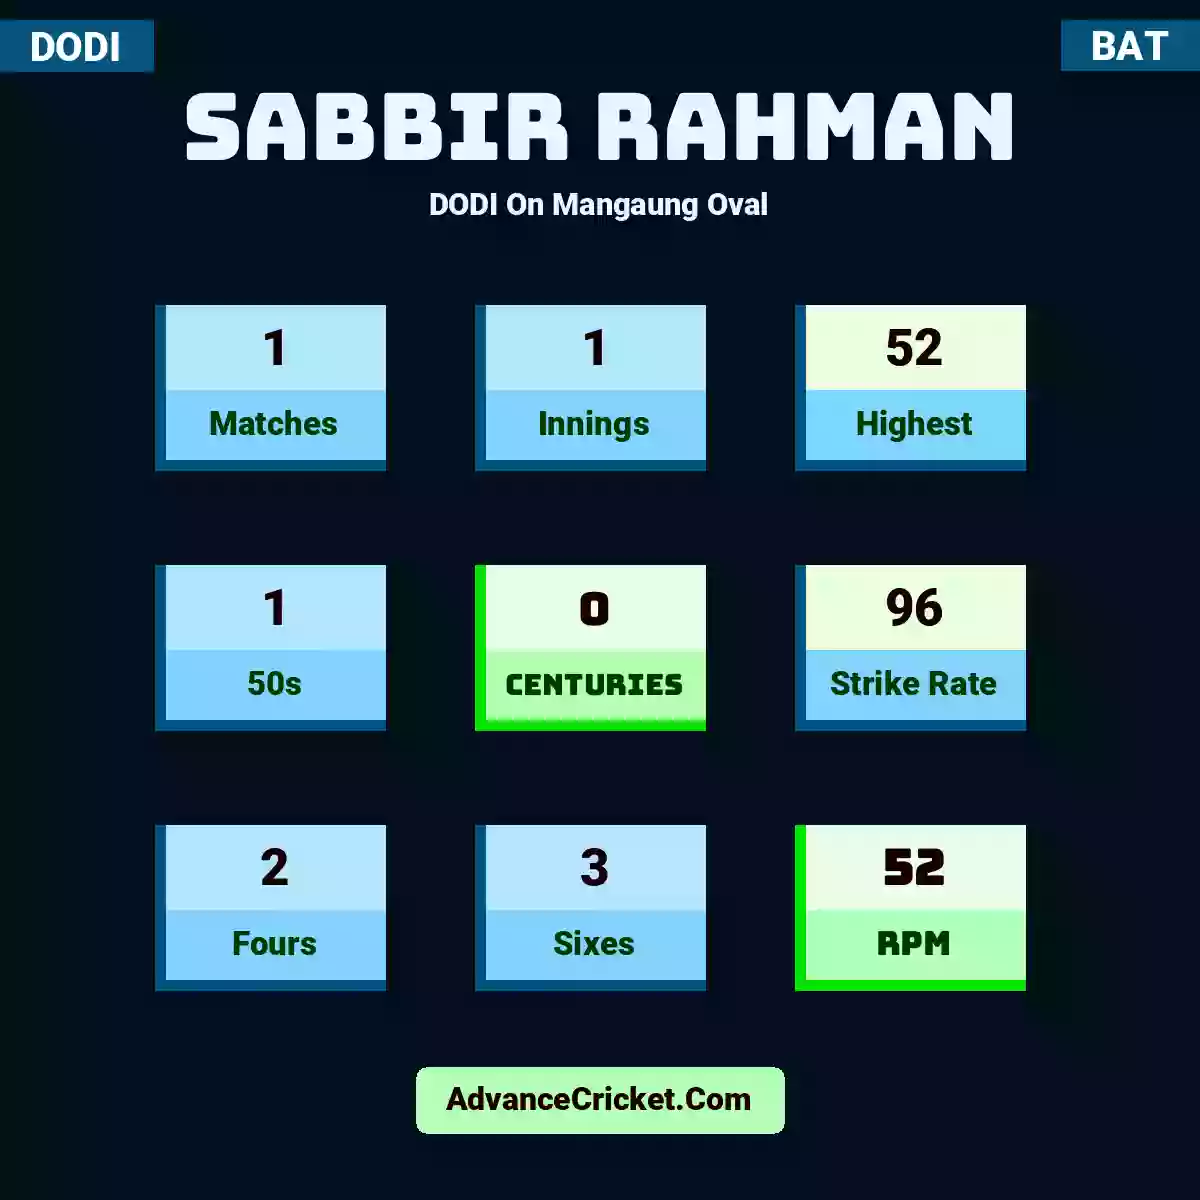 Sabbir Rahman DODI  On Mangaung Oval, Sabbir Rahman played 1 matches, scored 52 runs as highest, 1 half-centuries, and 0 centuries, with a strike rate of 96. S.Rahman hit 2 fours and 3 sixes, with an RPM of 52.